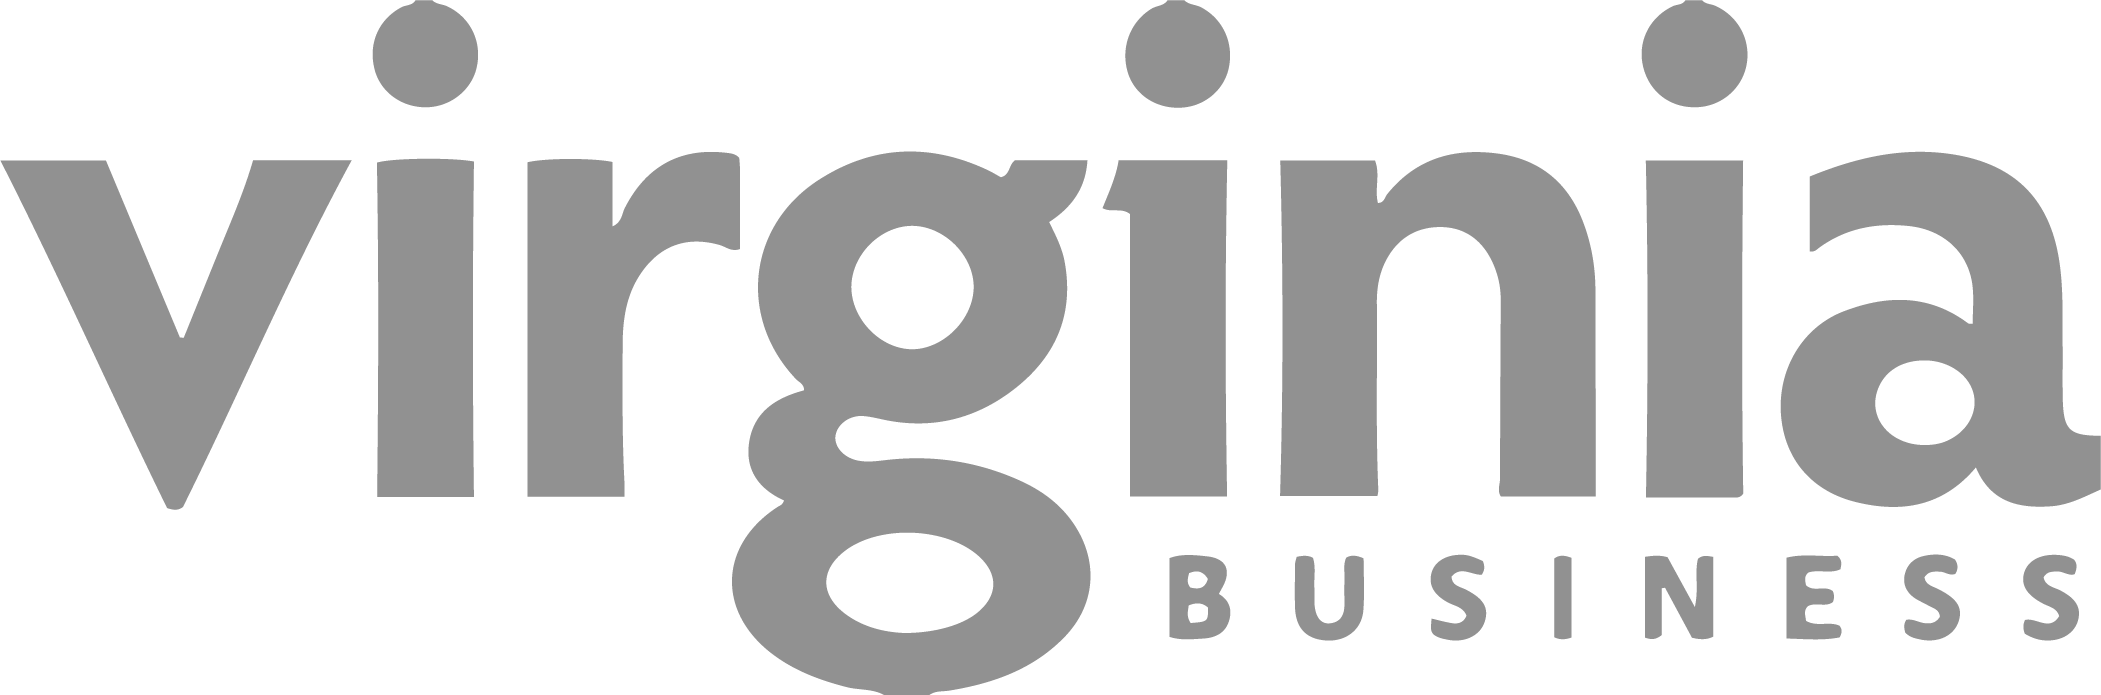 logo_virginia_business.png